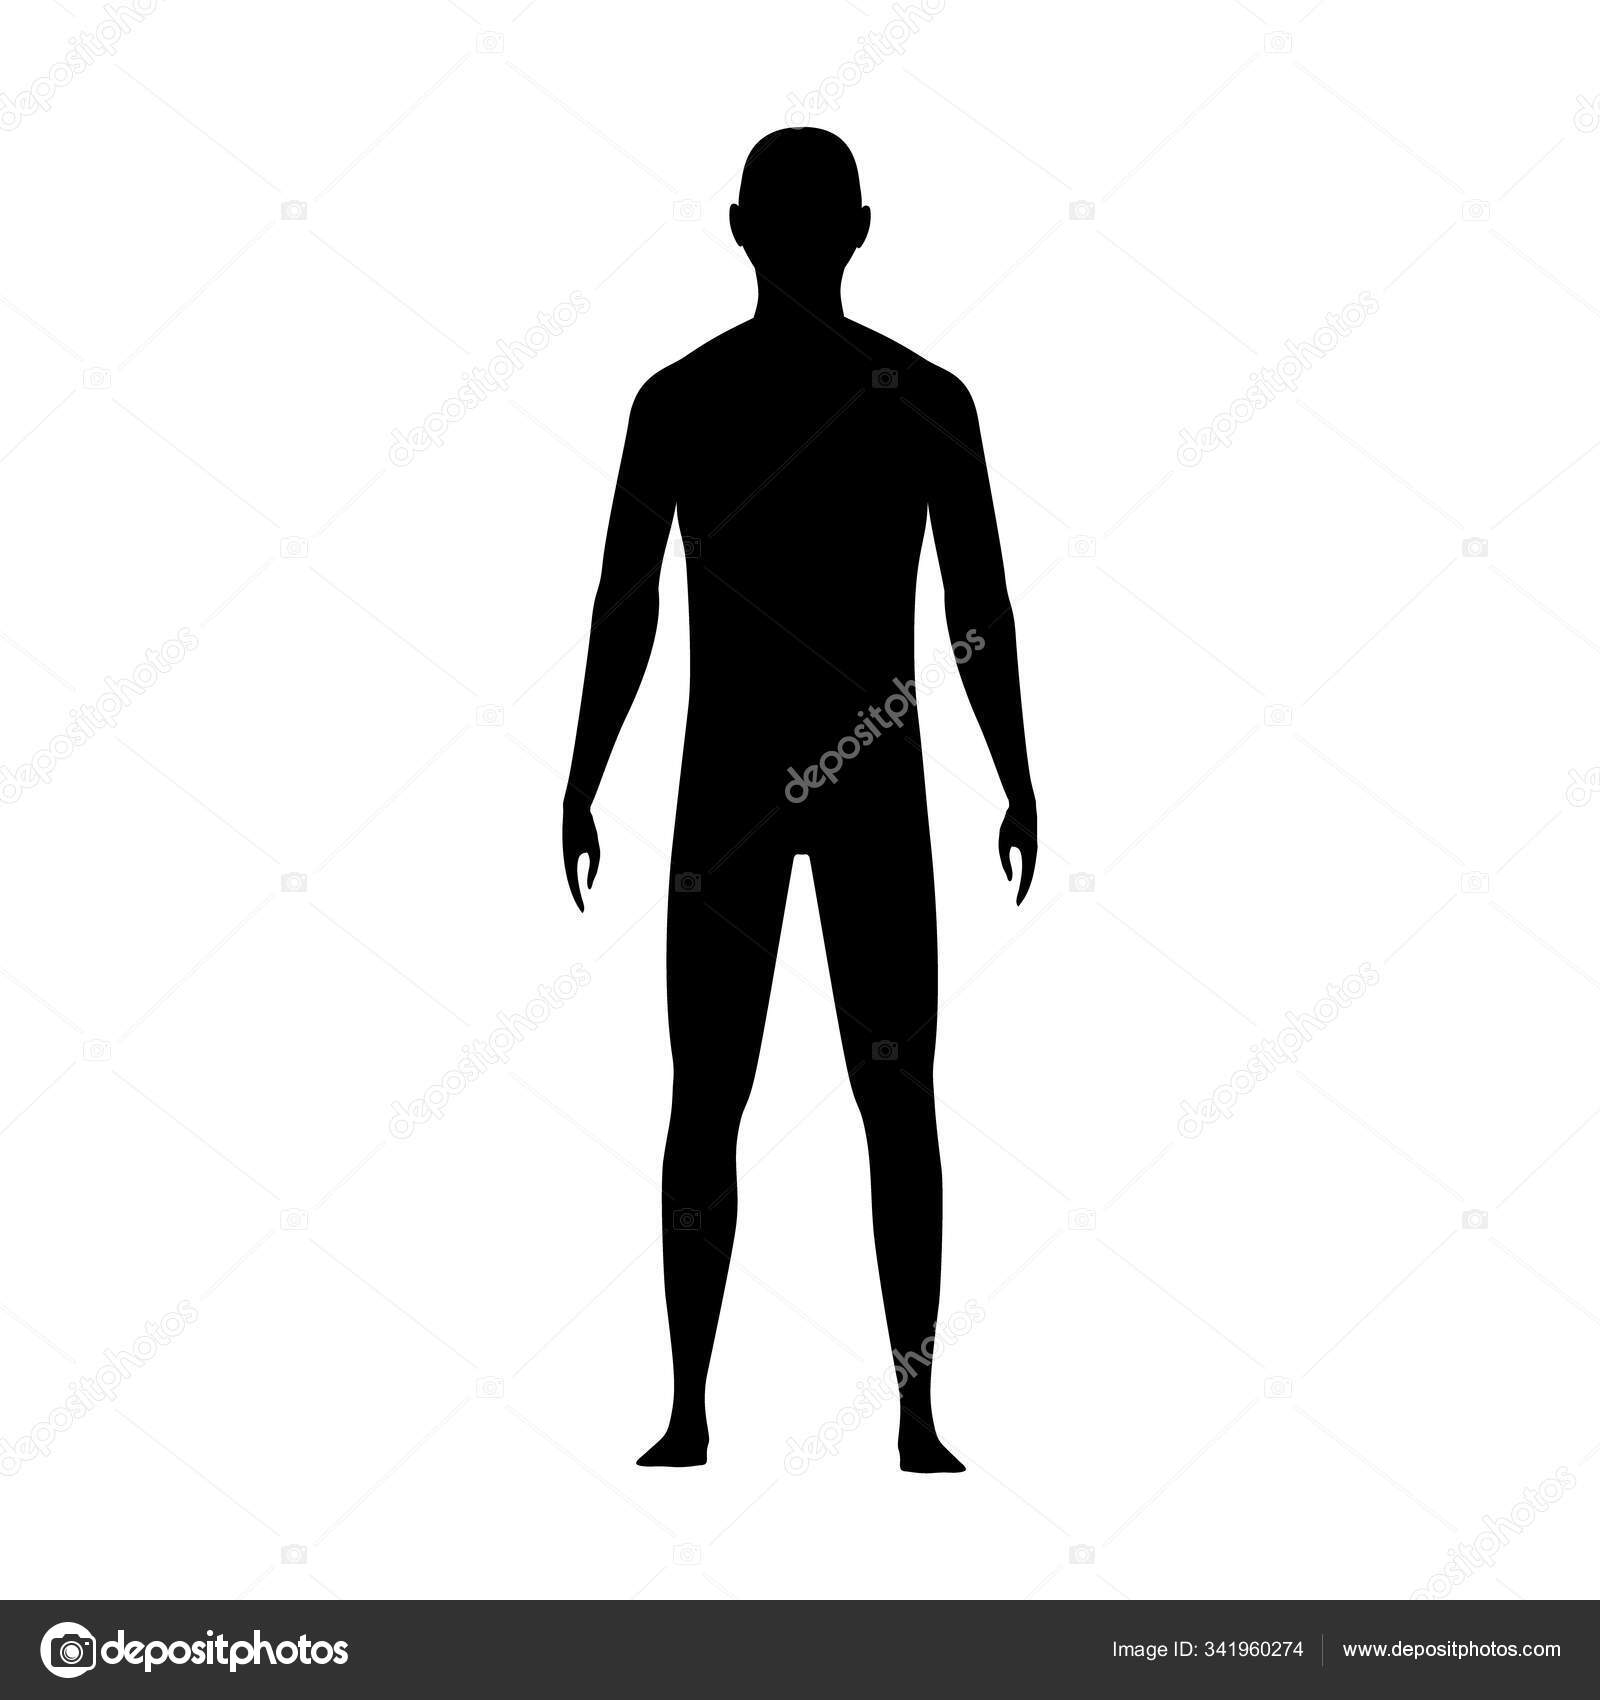 https://st3.depositphotos.com/11742109/34196/v/1600/depositphotos_341960274-stock-illustration-front-view-human-body-silhouette.jpg